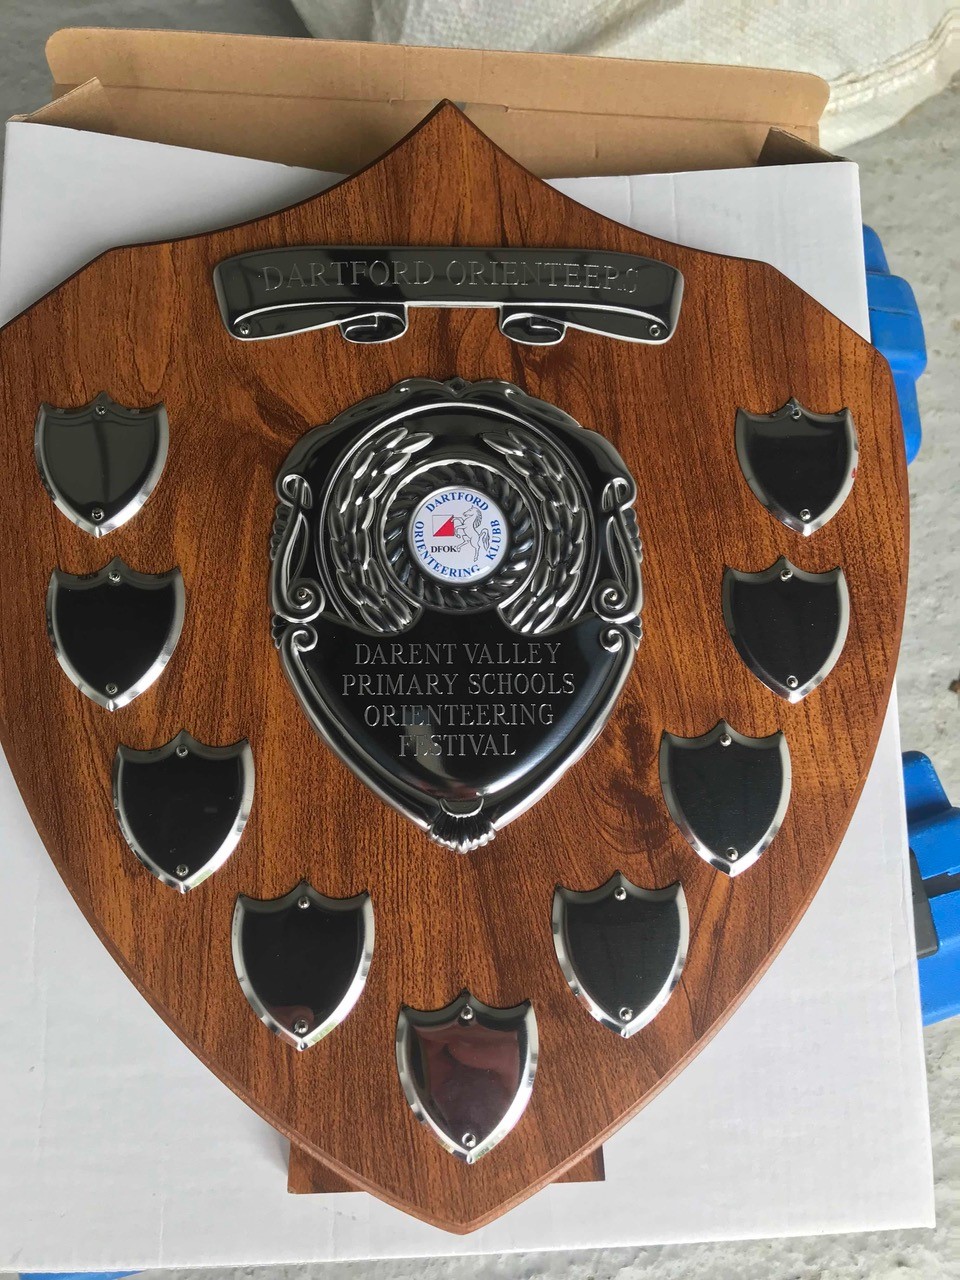 Shield for Darent Valley primary schools orienteering festival